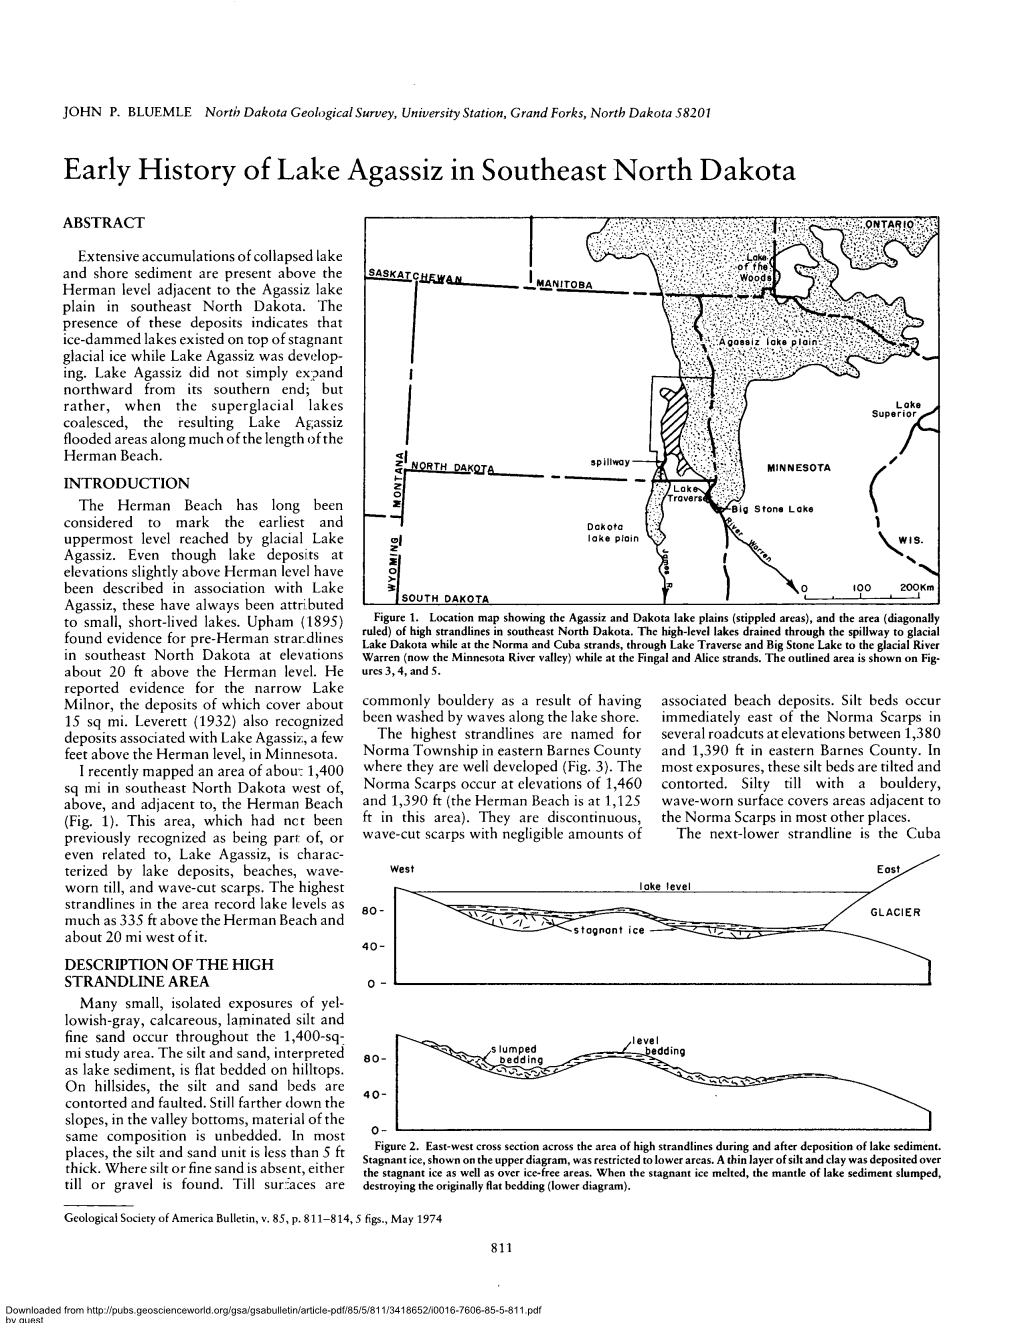 Early History of Lake Agassiz in Southeast North Dakota